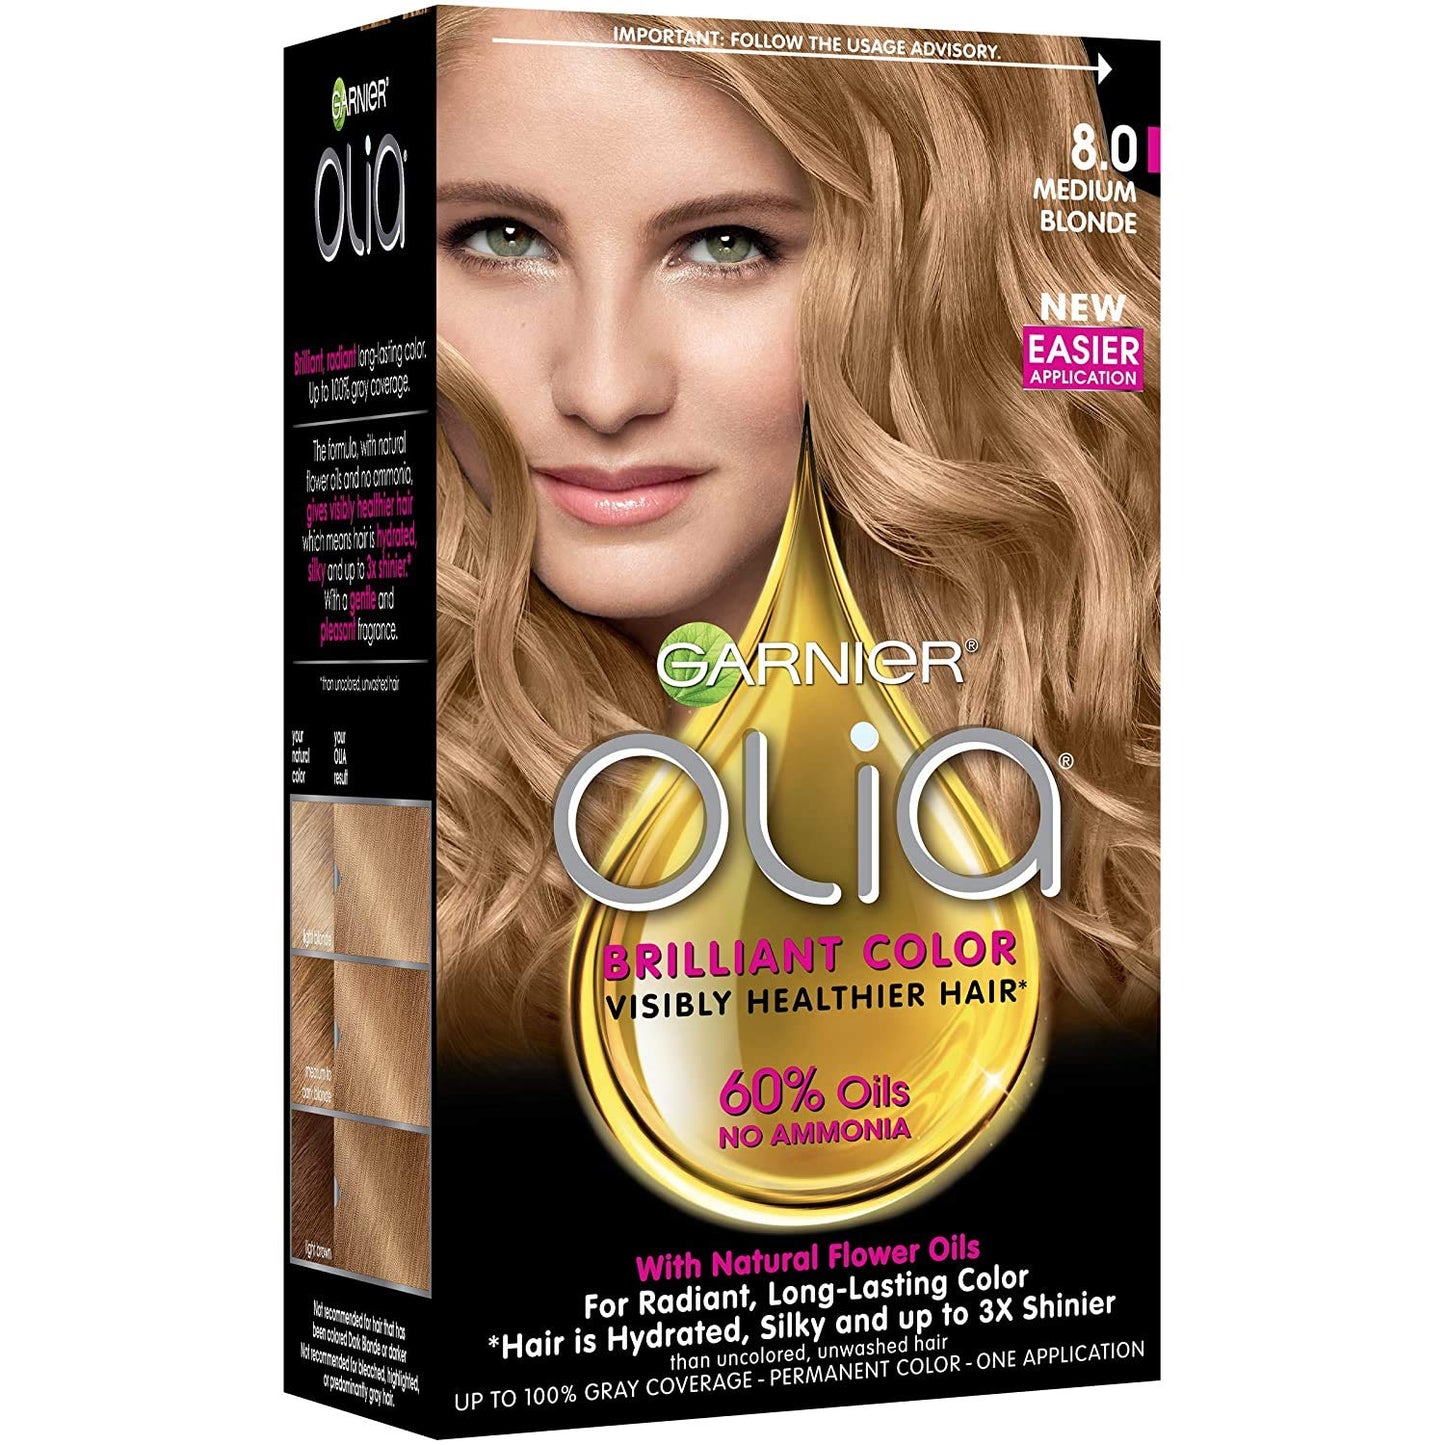 Garnier Olia Ammonia Free Hair Color [8.0] Medium Blonde )